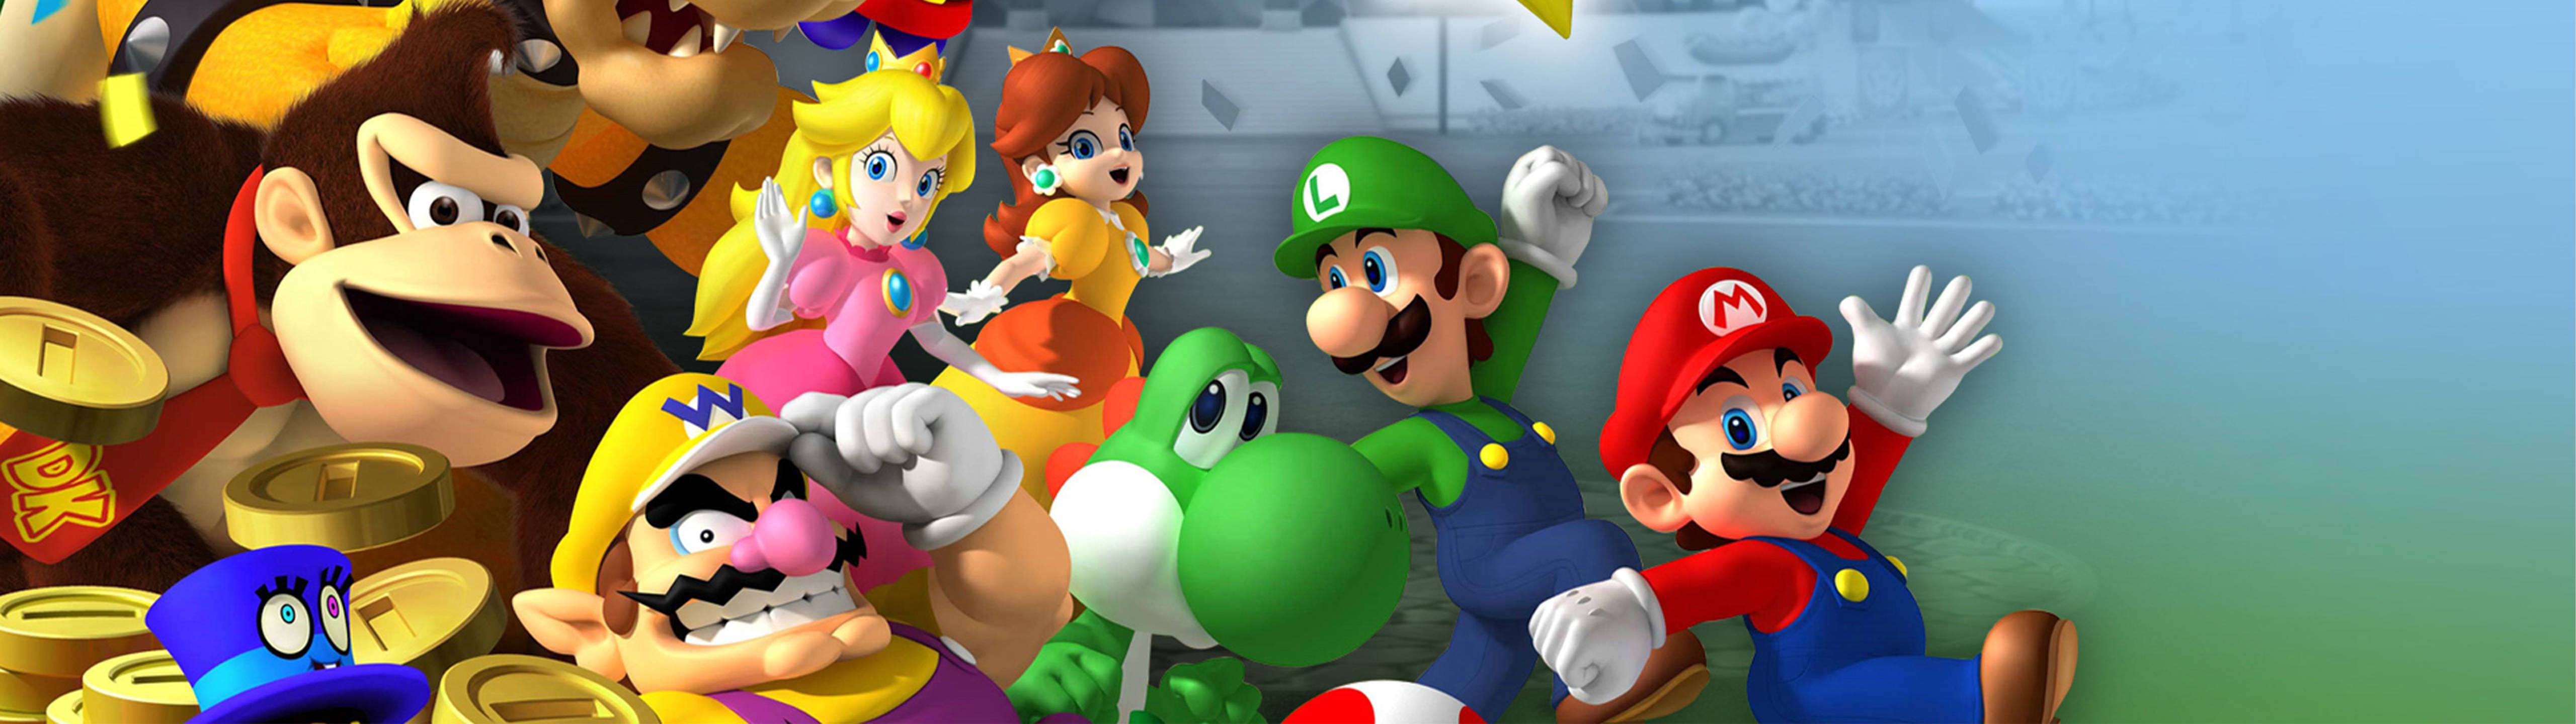 5120x1440 Game Mario Luigi And Friends Wallpaper